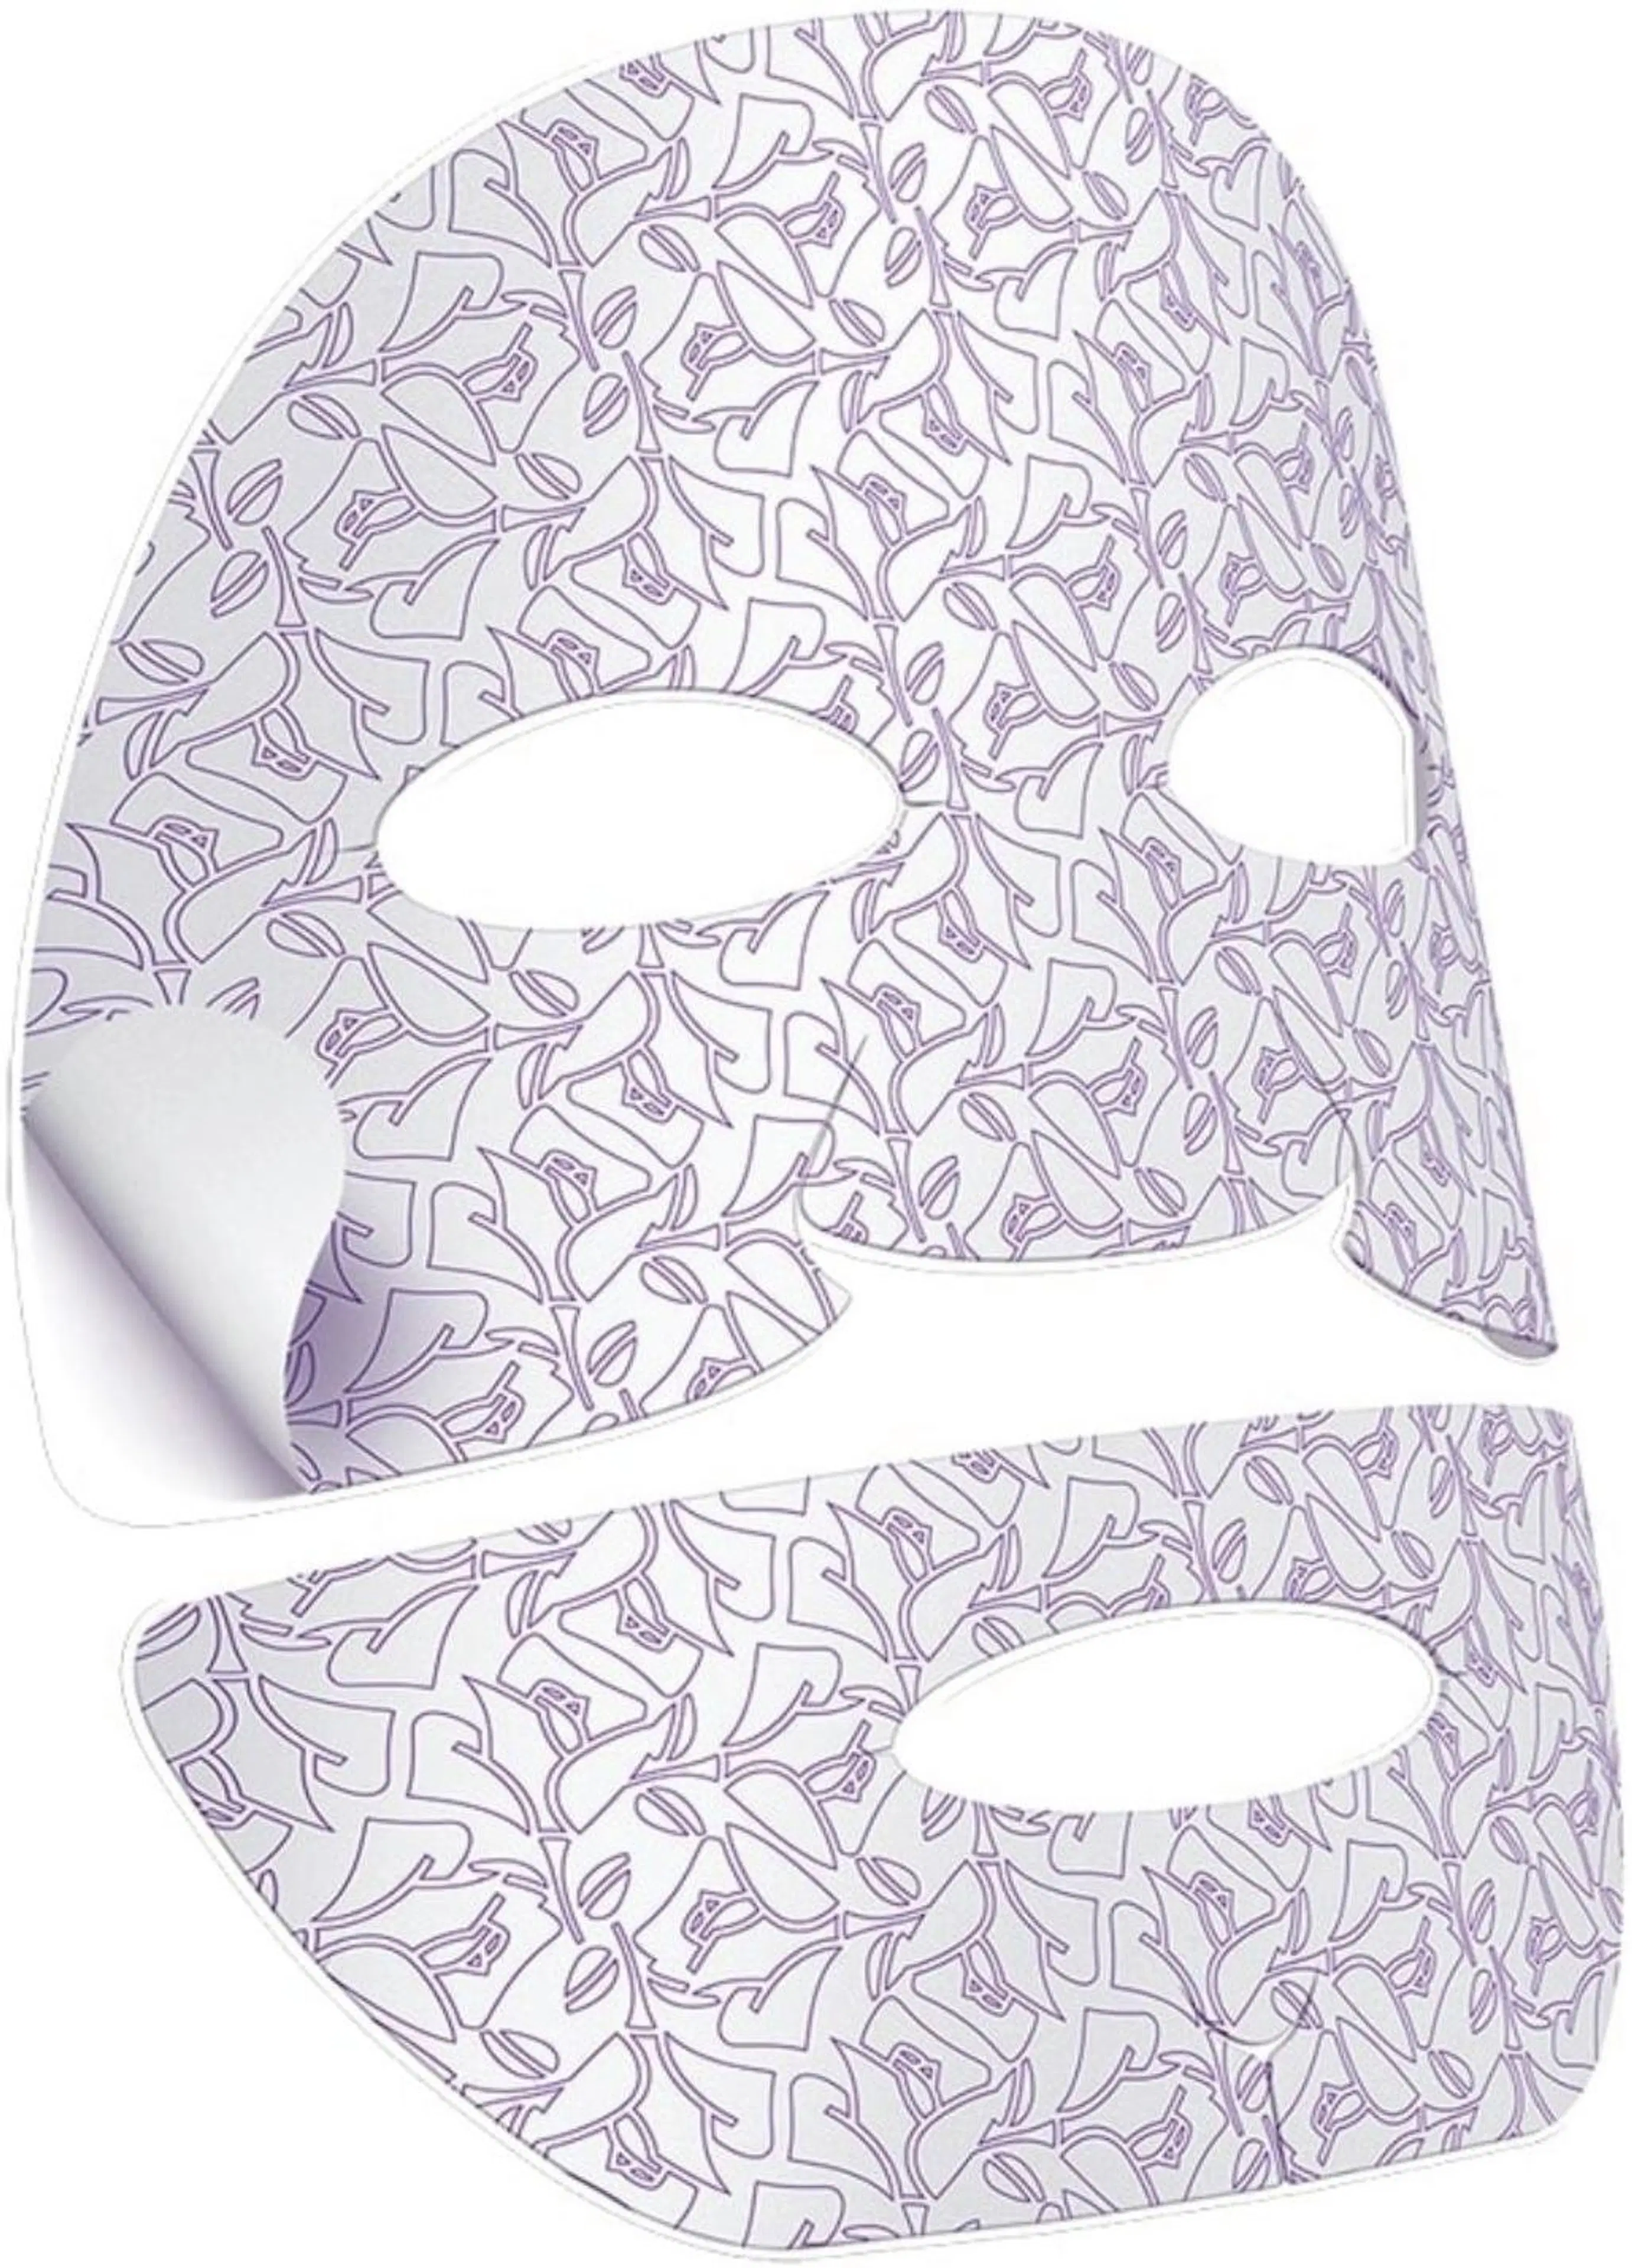 Lancôme Rénergie Multi-Lift Ultra Double-Wrapping Cream Mask naamio